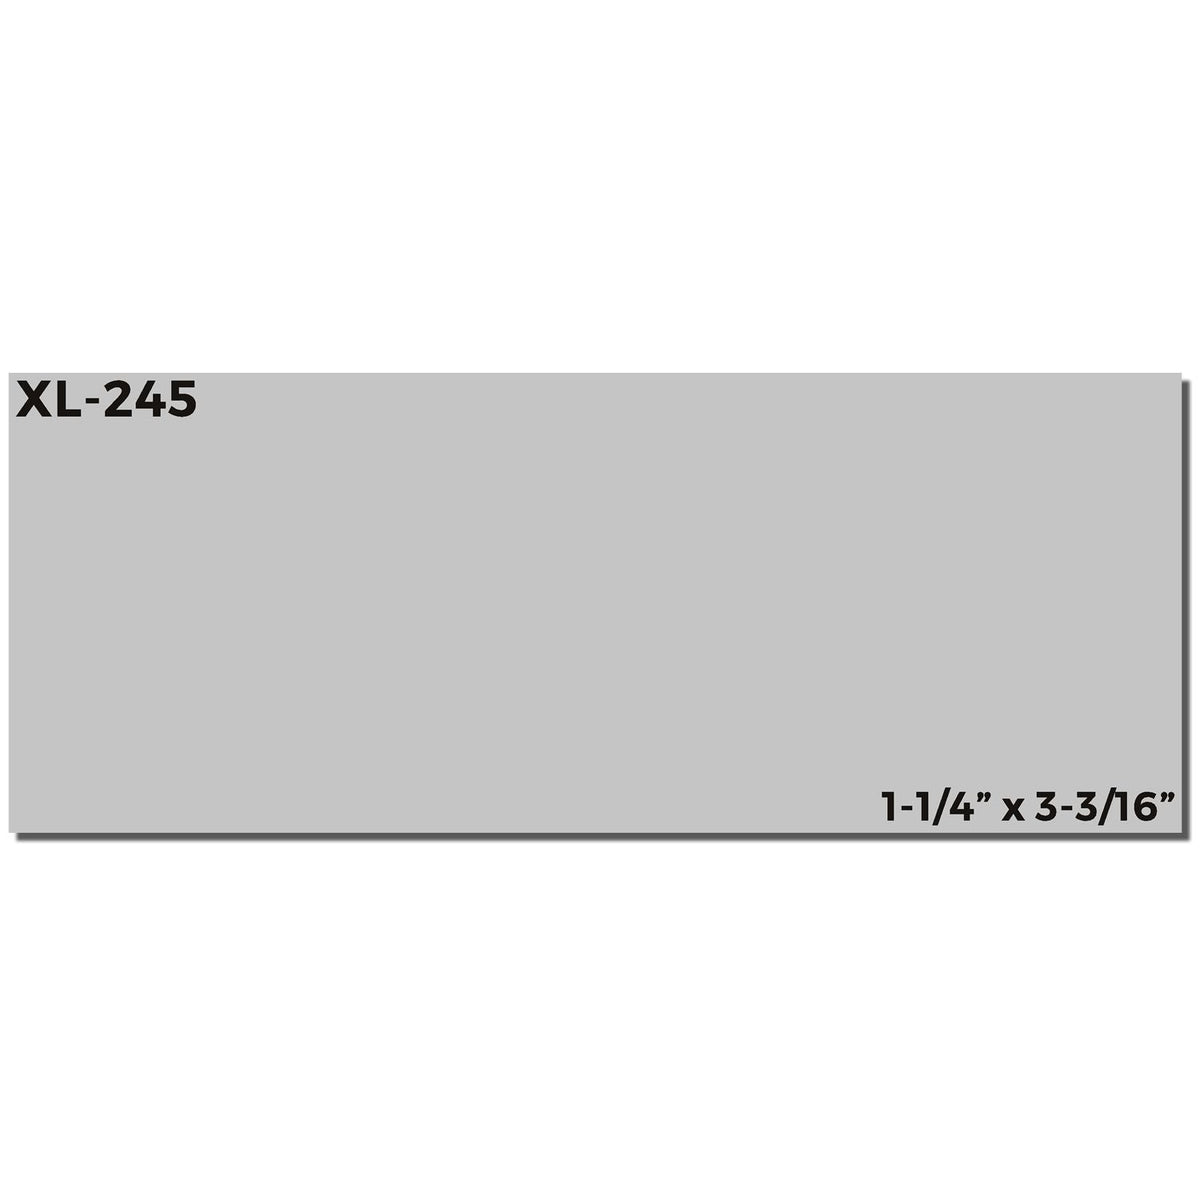 Maxlight Xl2 245 Pre Inked Stamp 1 1 4 X 3 3 16 Imprint Sample